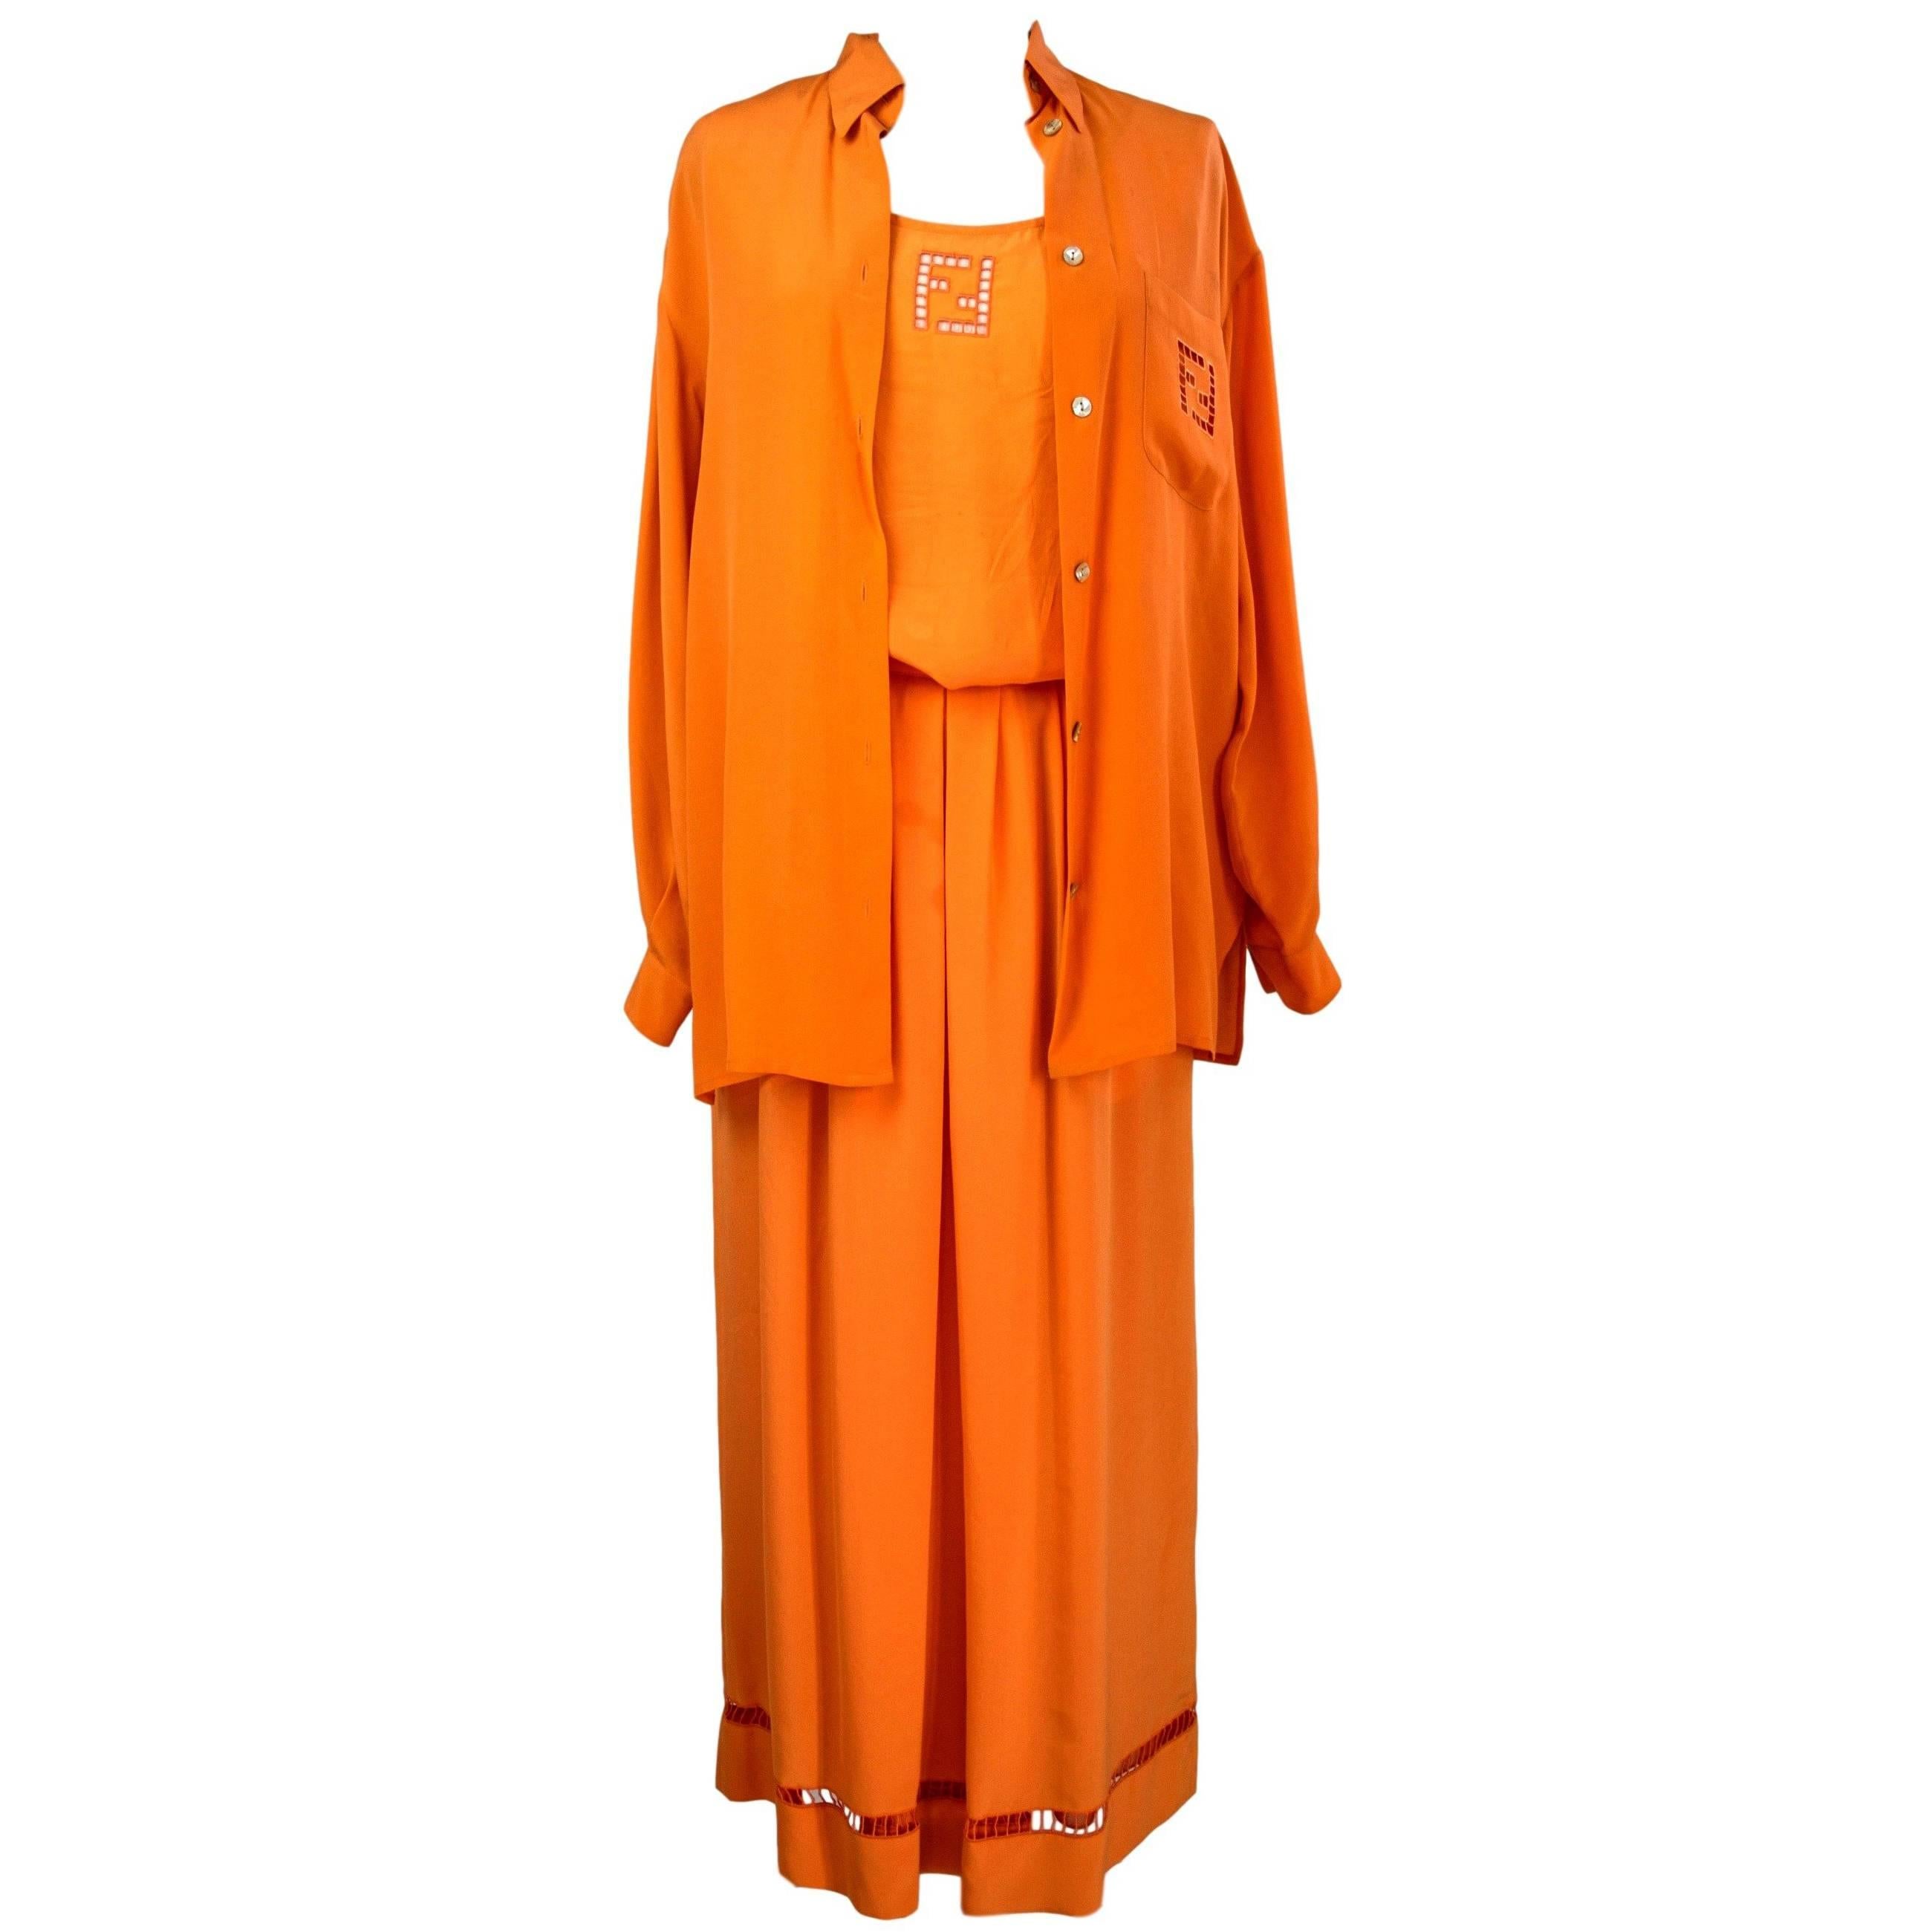 Fendi 365 vintage 1980s dress set suit blouse shirt and skirt orange silk sz 42